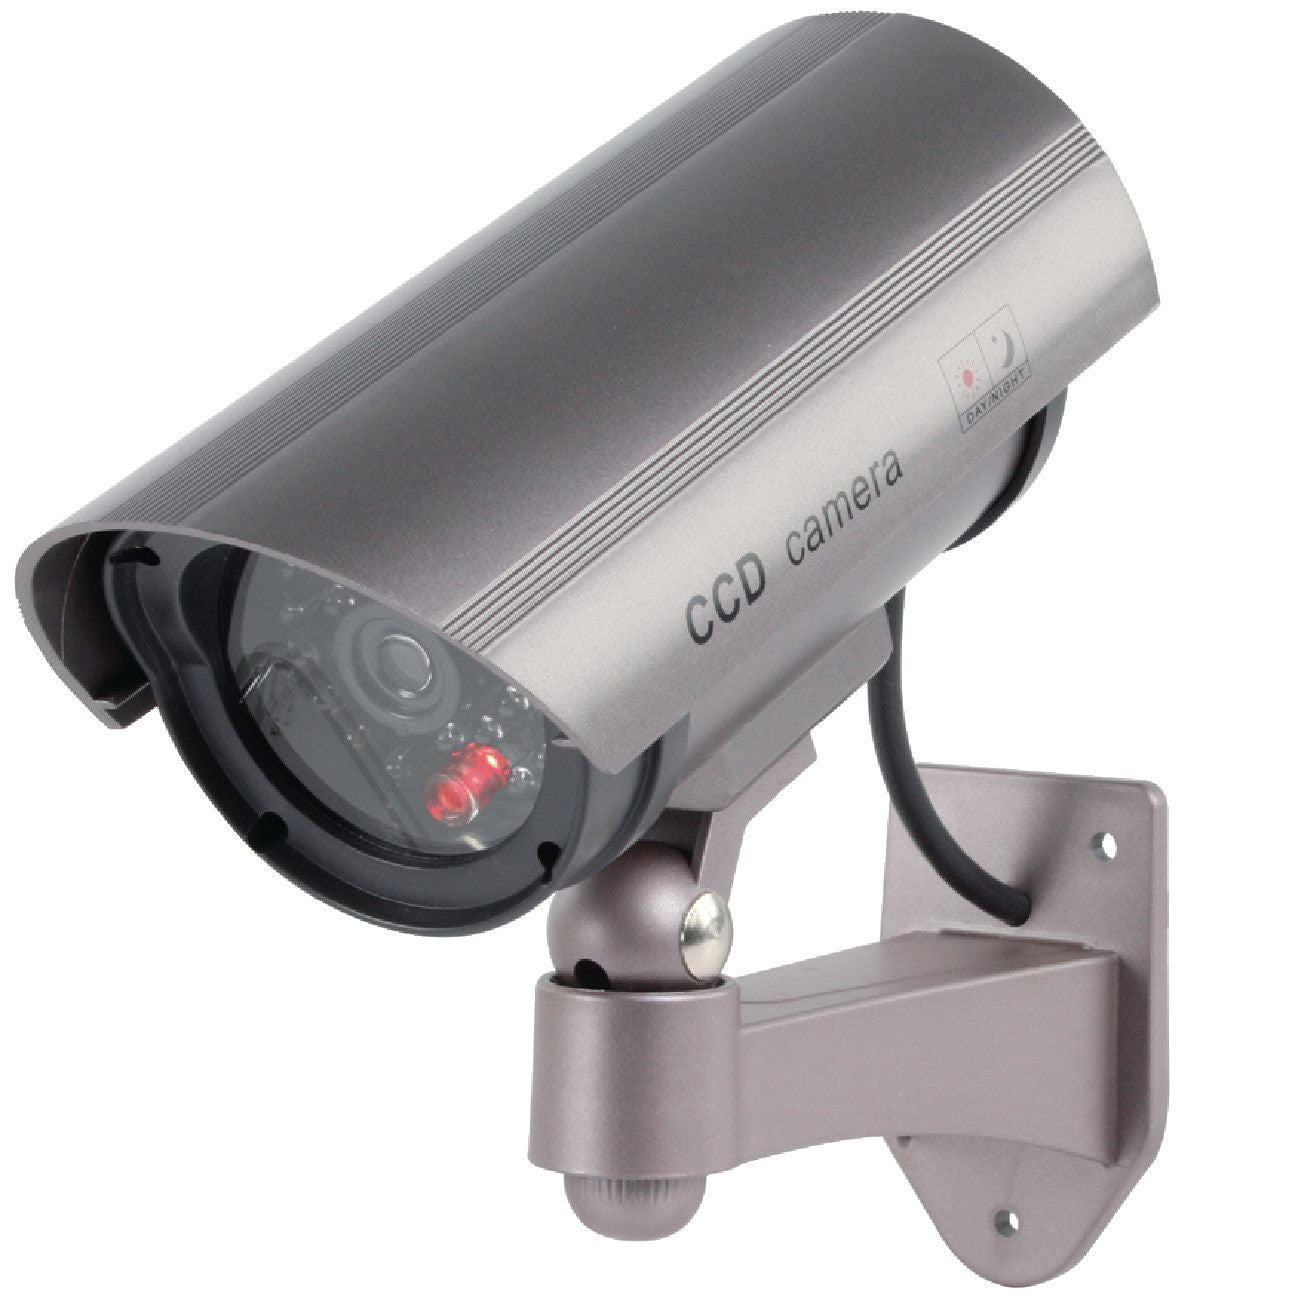 Dummy IR CCTV Camera with Red Flashing LED